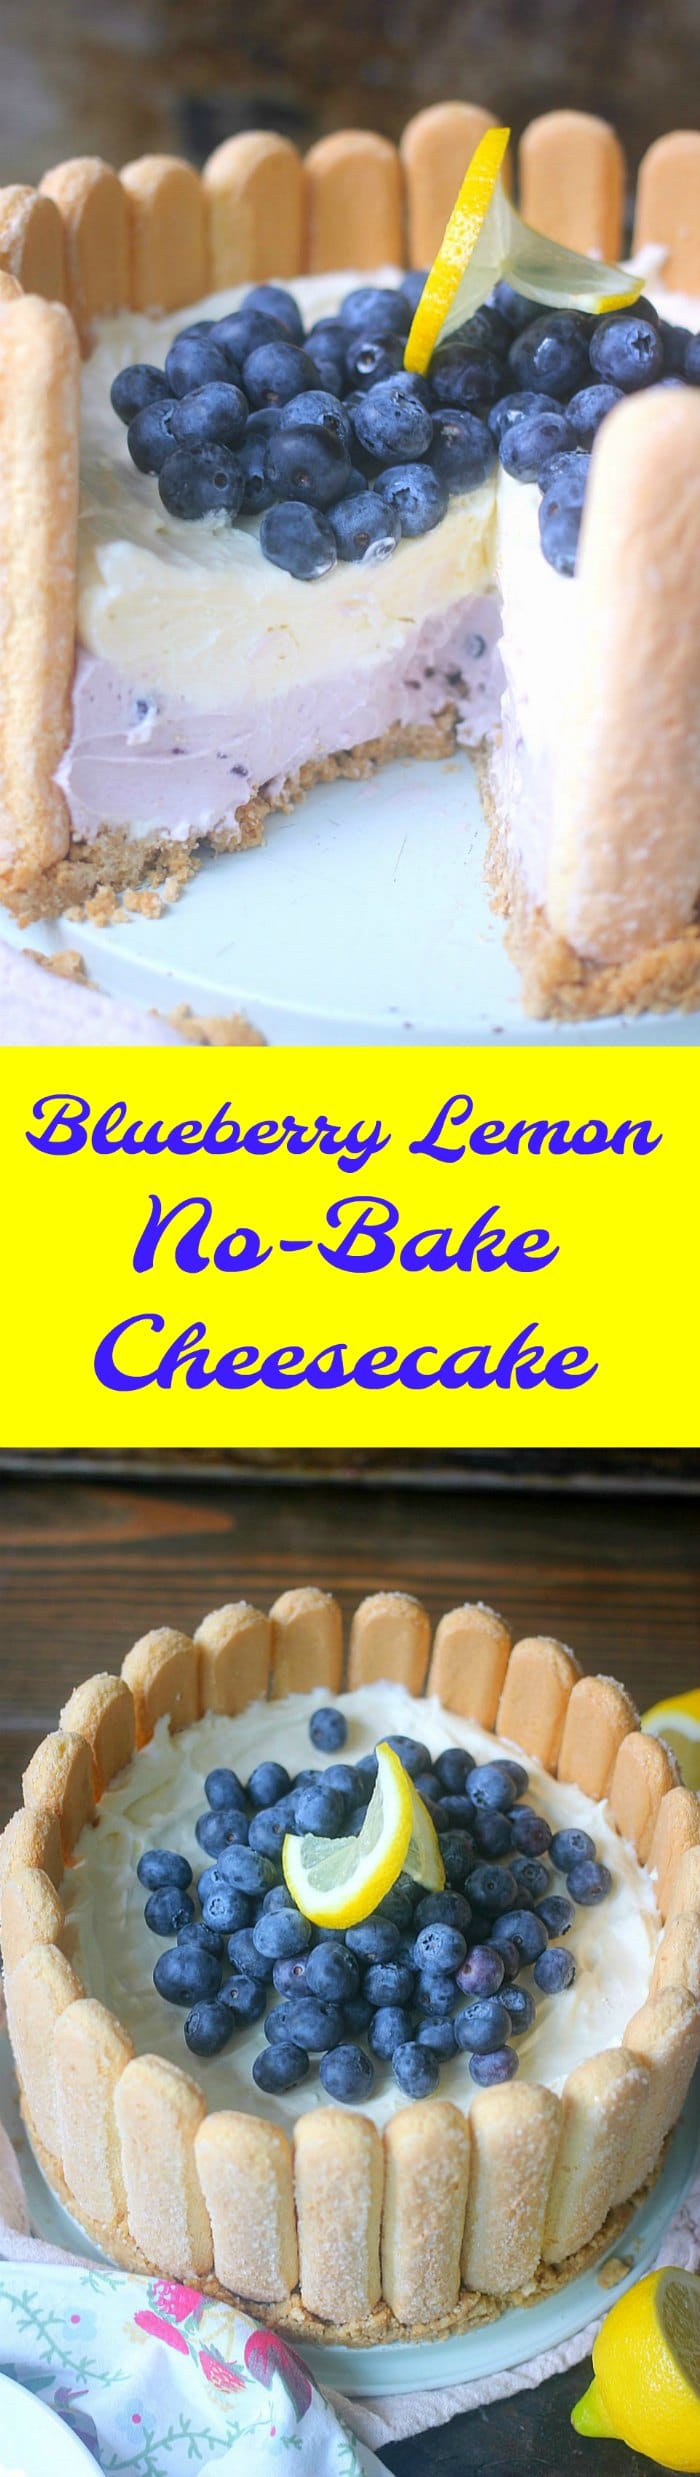 Blueberry Lemon No-Bake Cheesecake